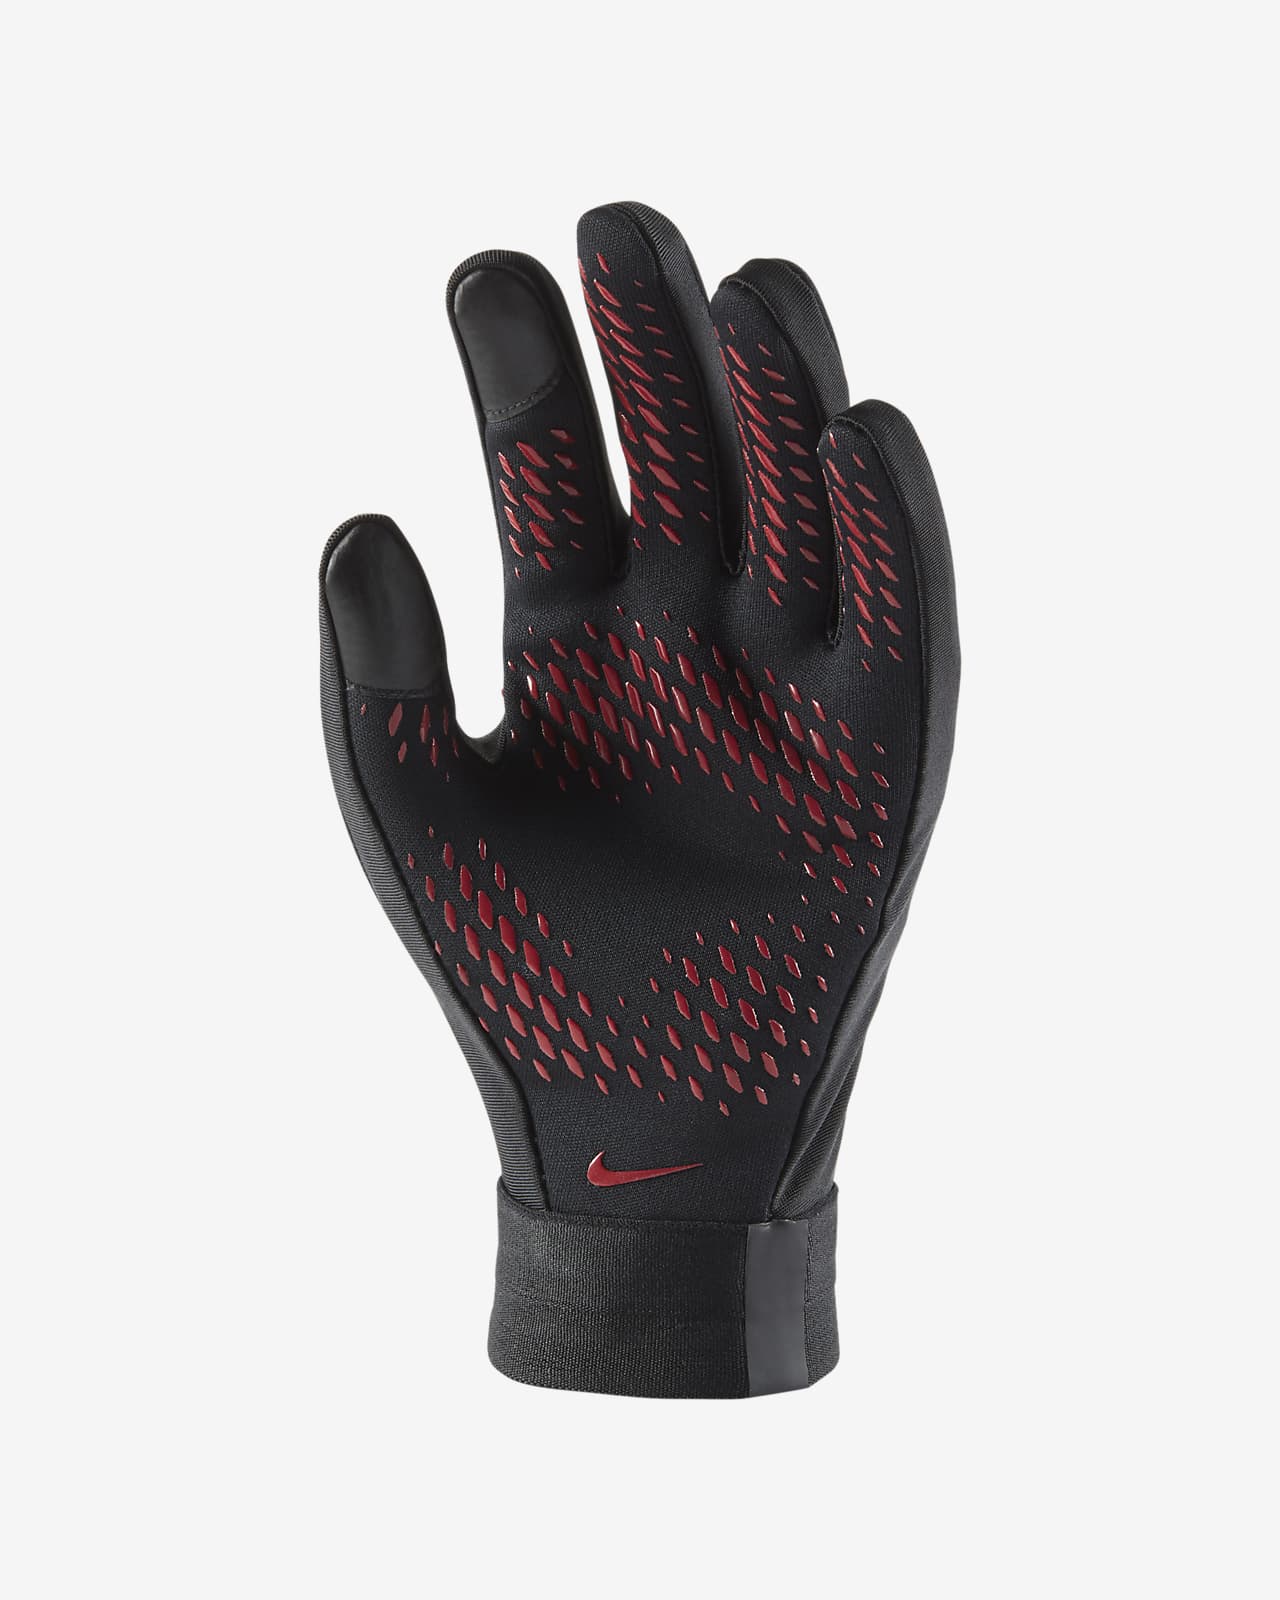 hyperwarm football gloves